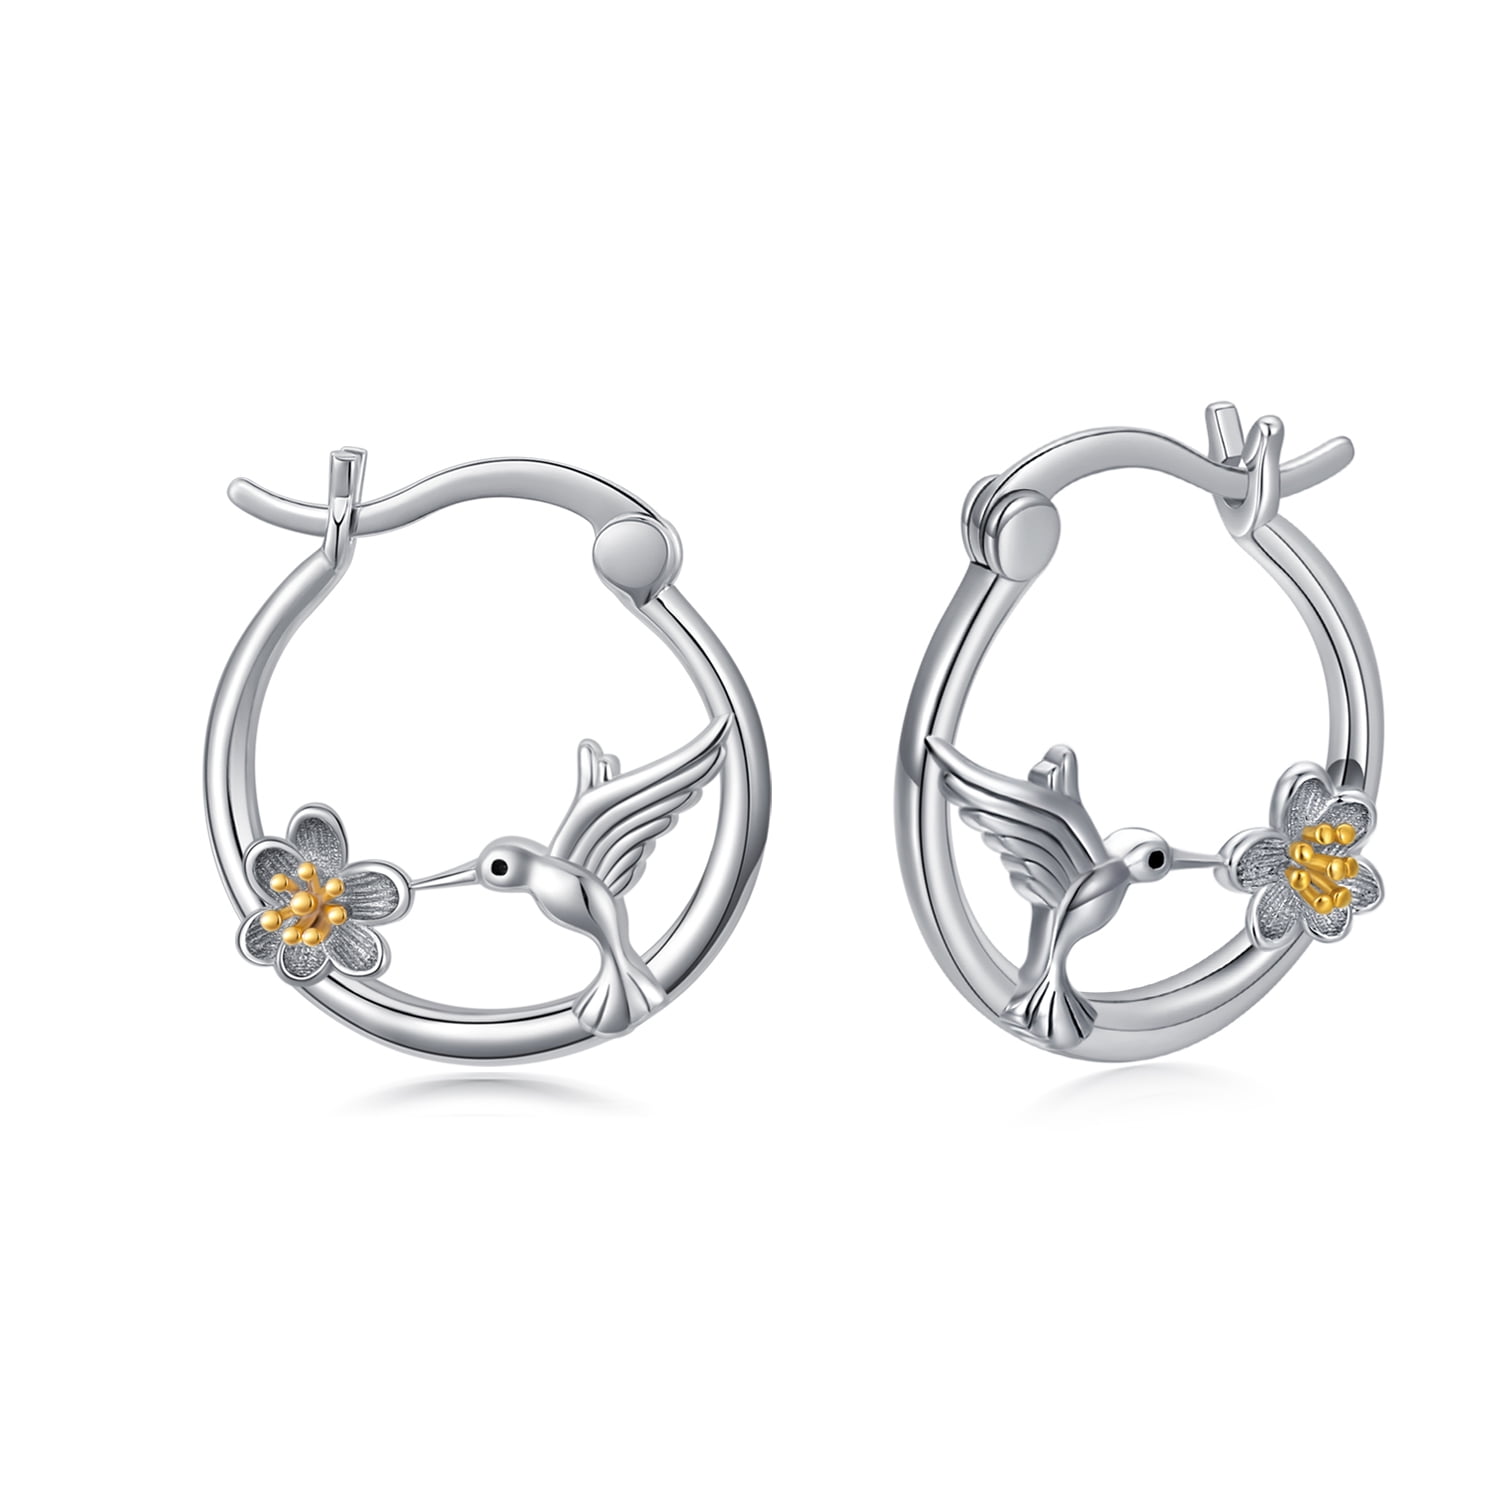 Bear earrings Mothers day gift~animal earrings~animal jewelry~silver bear earrings~Birthday gift~Nature earrings~Friend gift